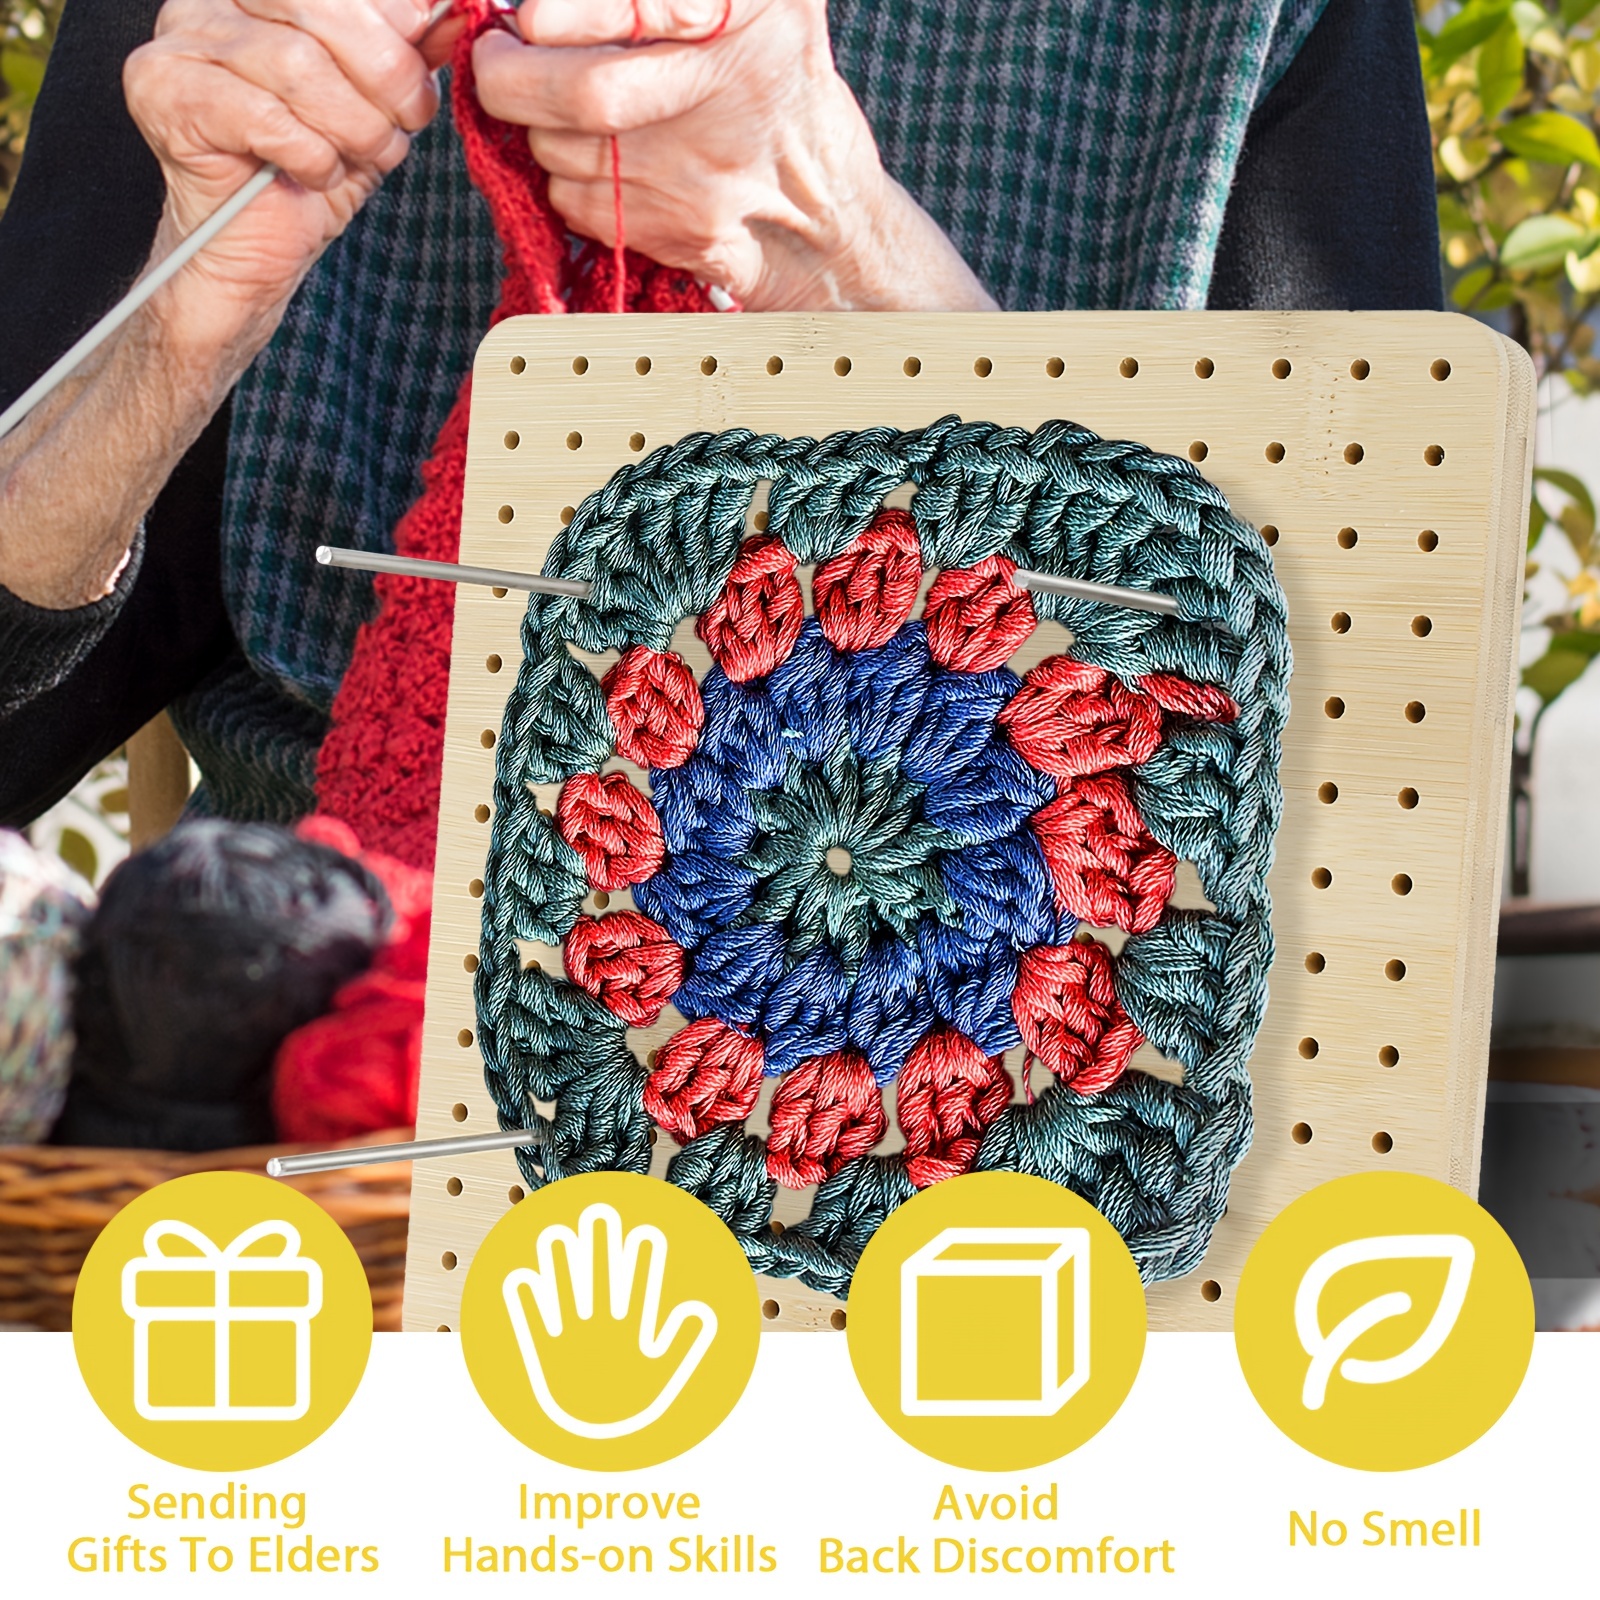 Crochet Blocking Board with Pins Multi Purpose Wooden Square